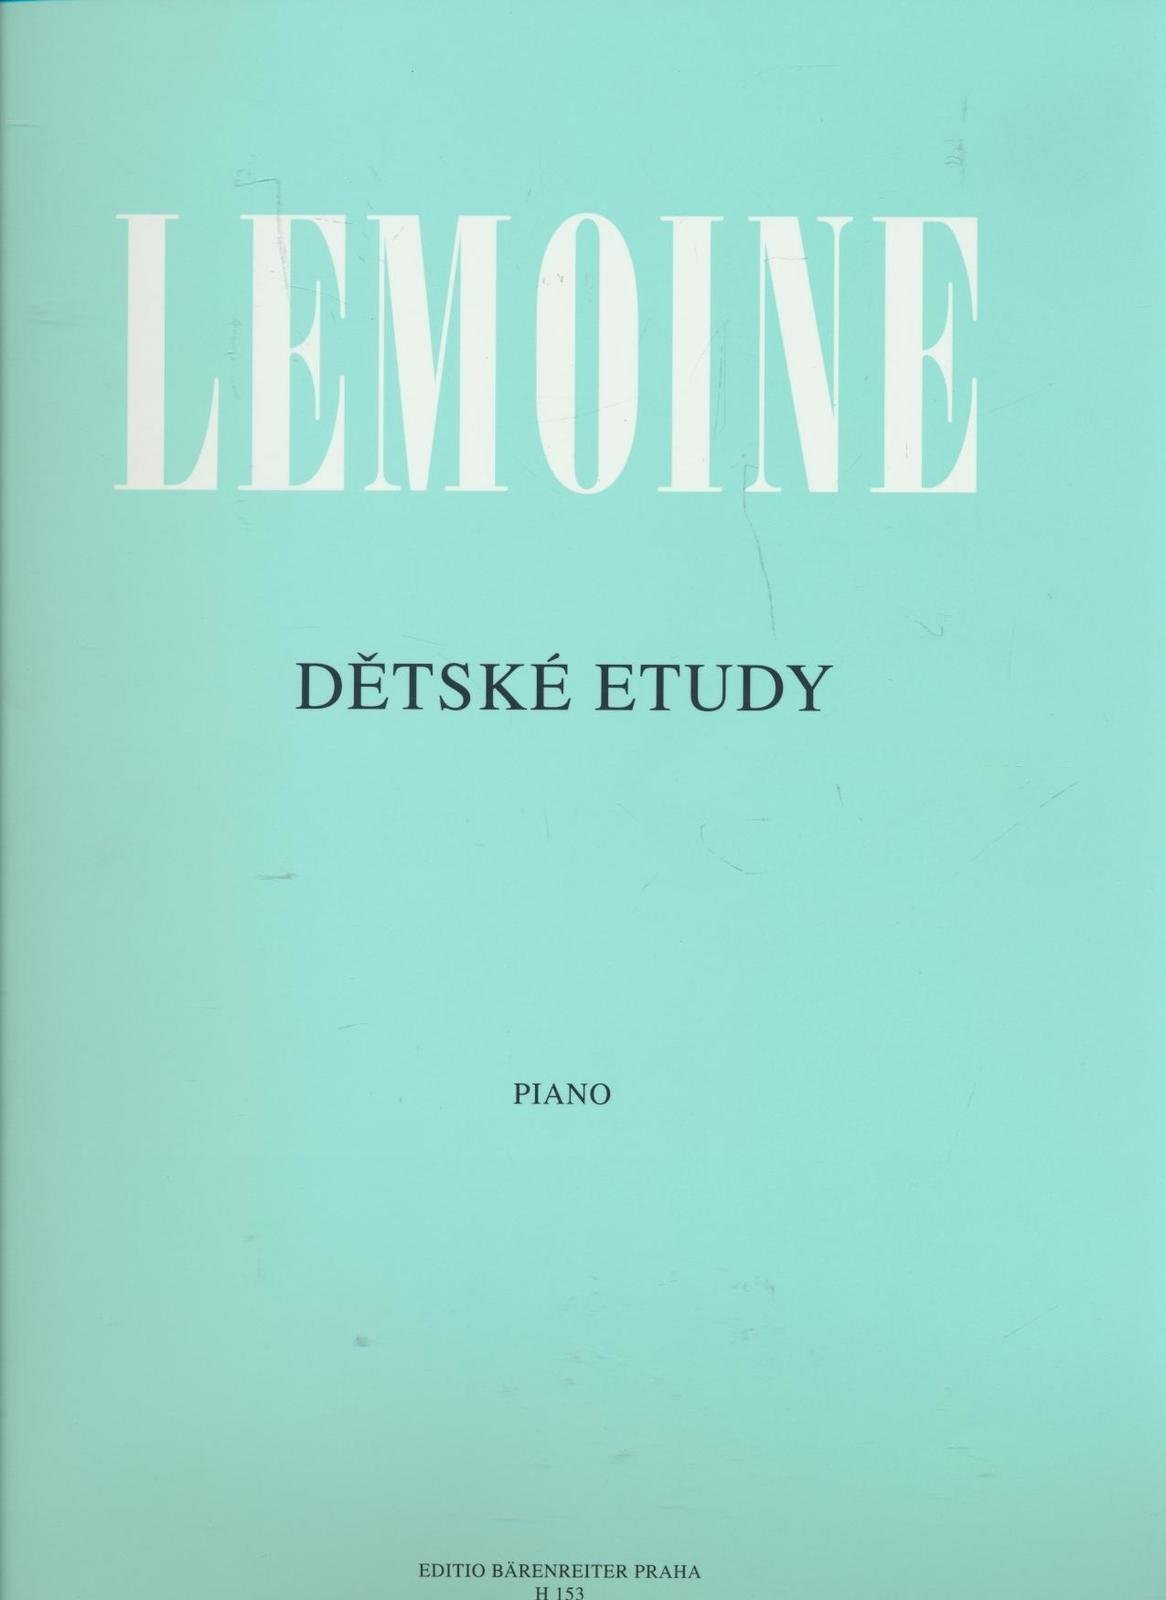 Bladmuziek piano's Henri Lemoine Detské etudy op. 37